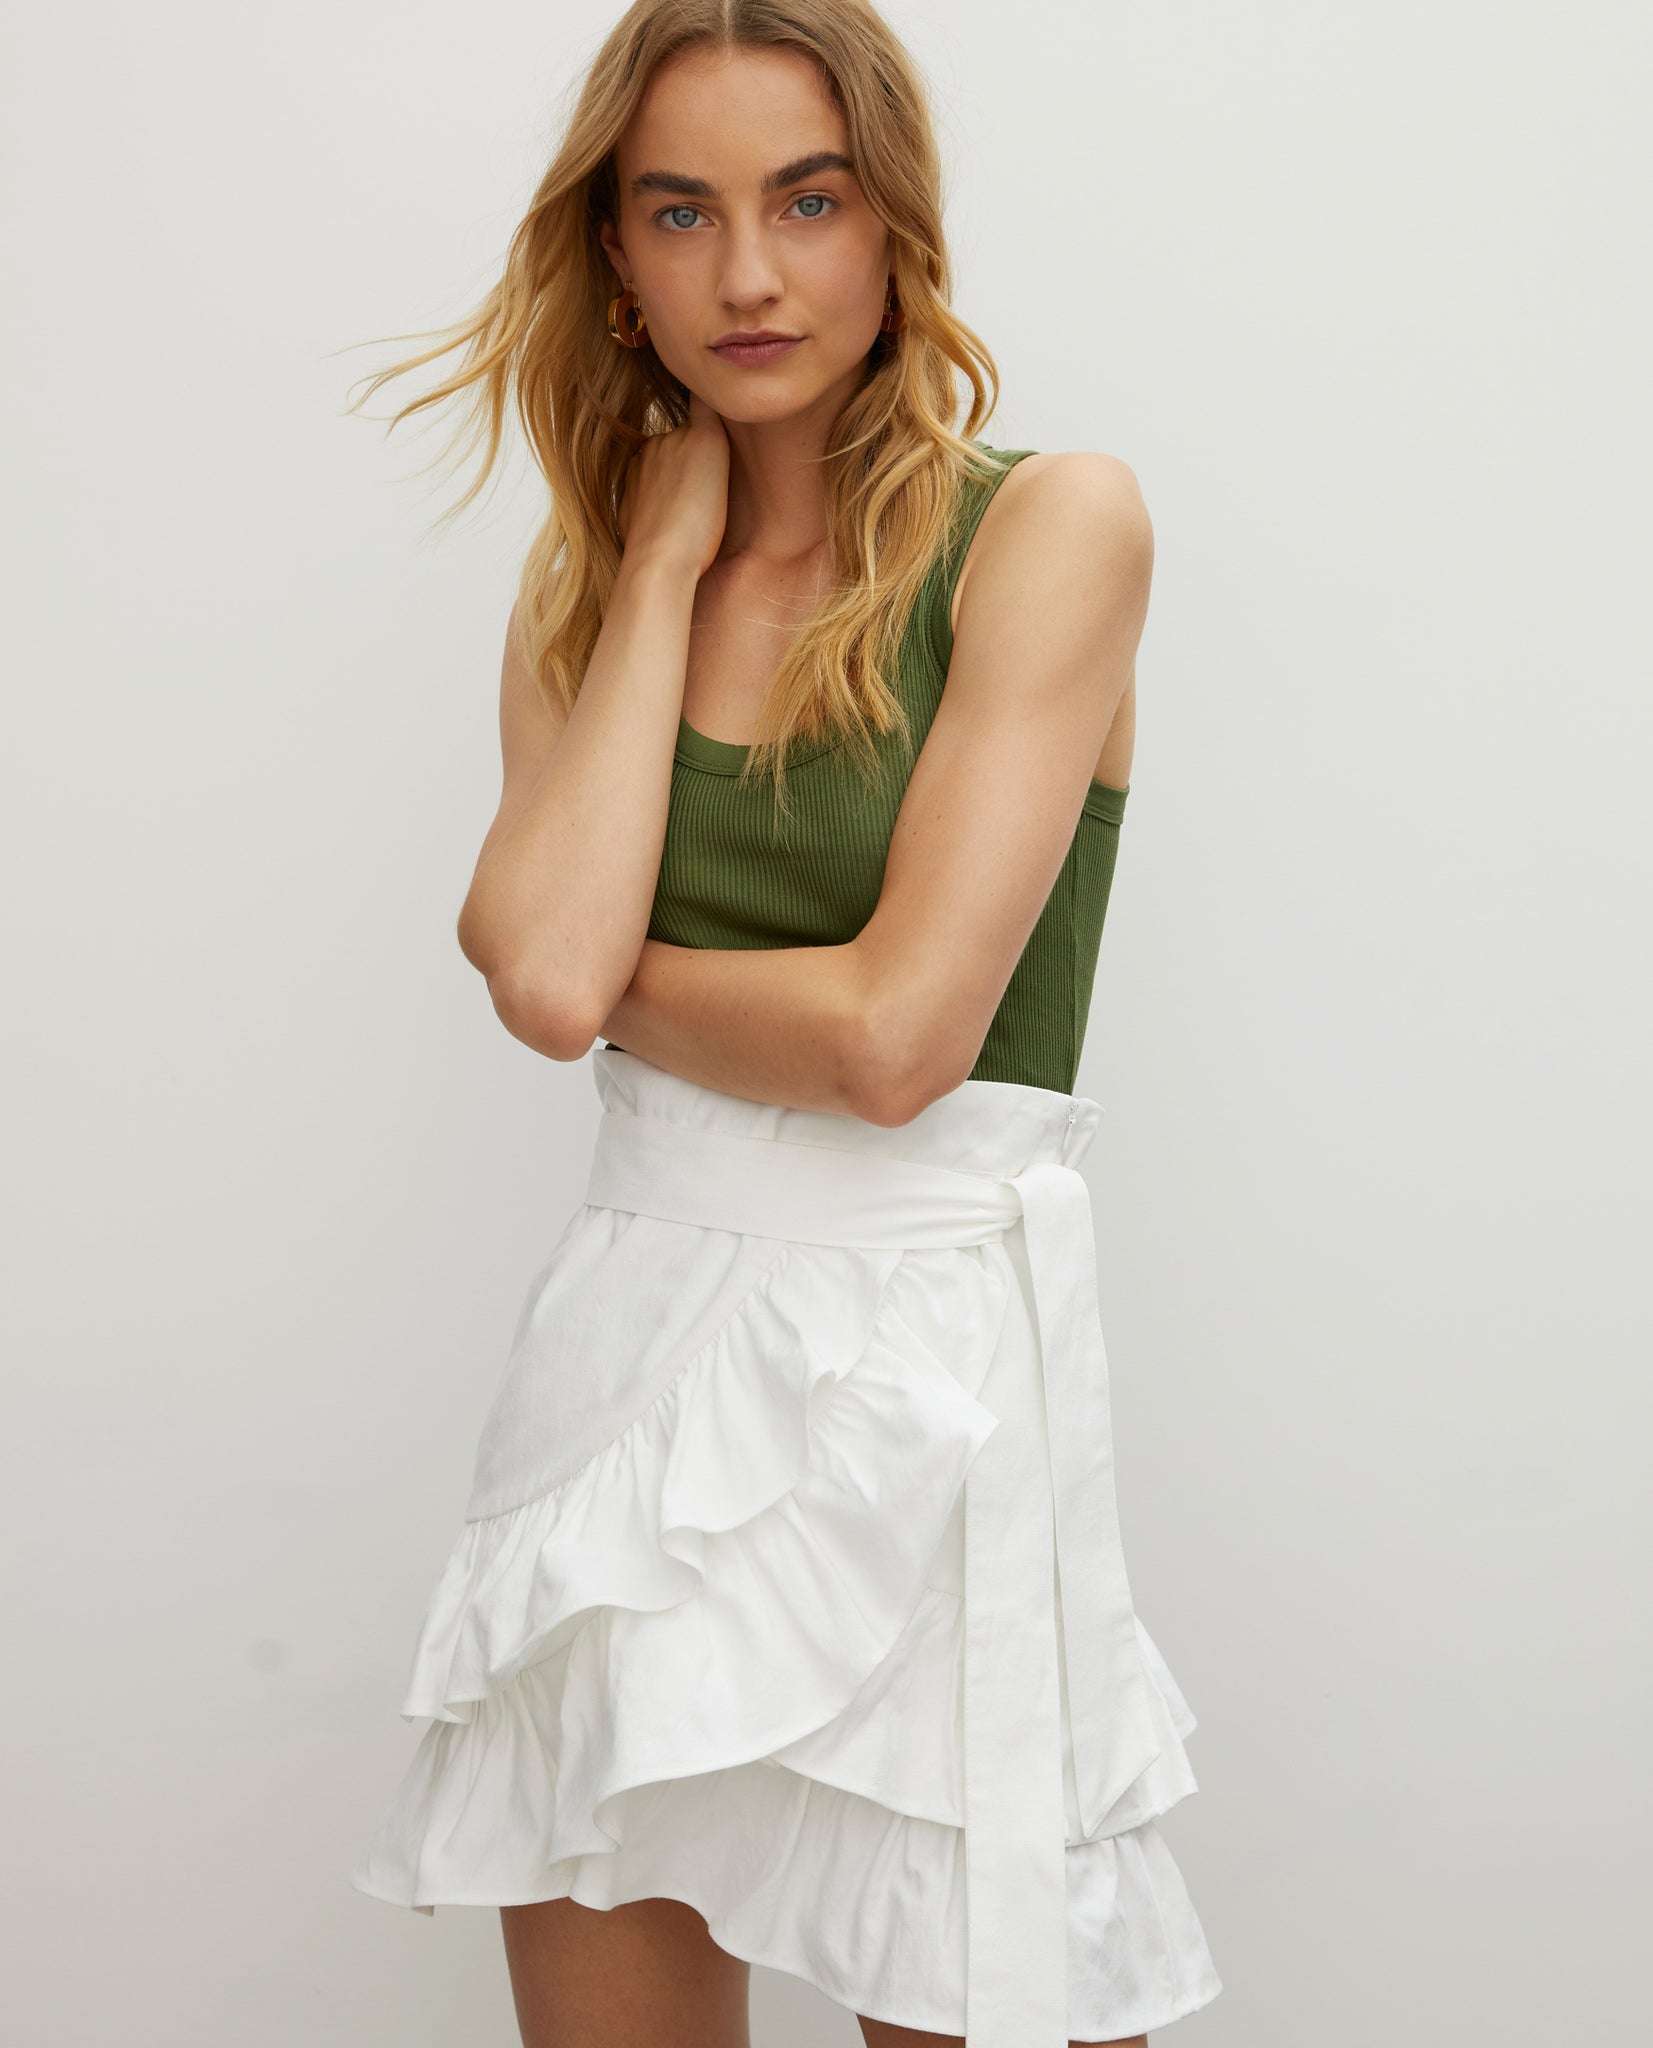 Mazia skirt in white by Róhe